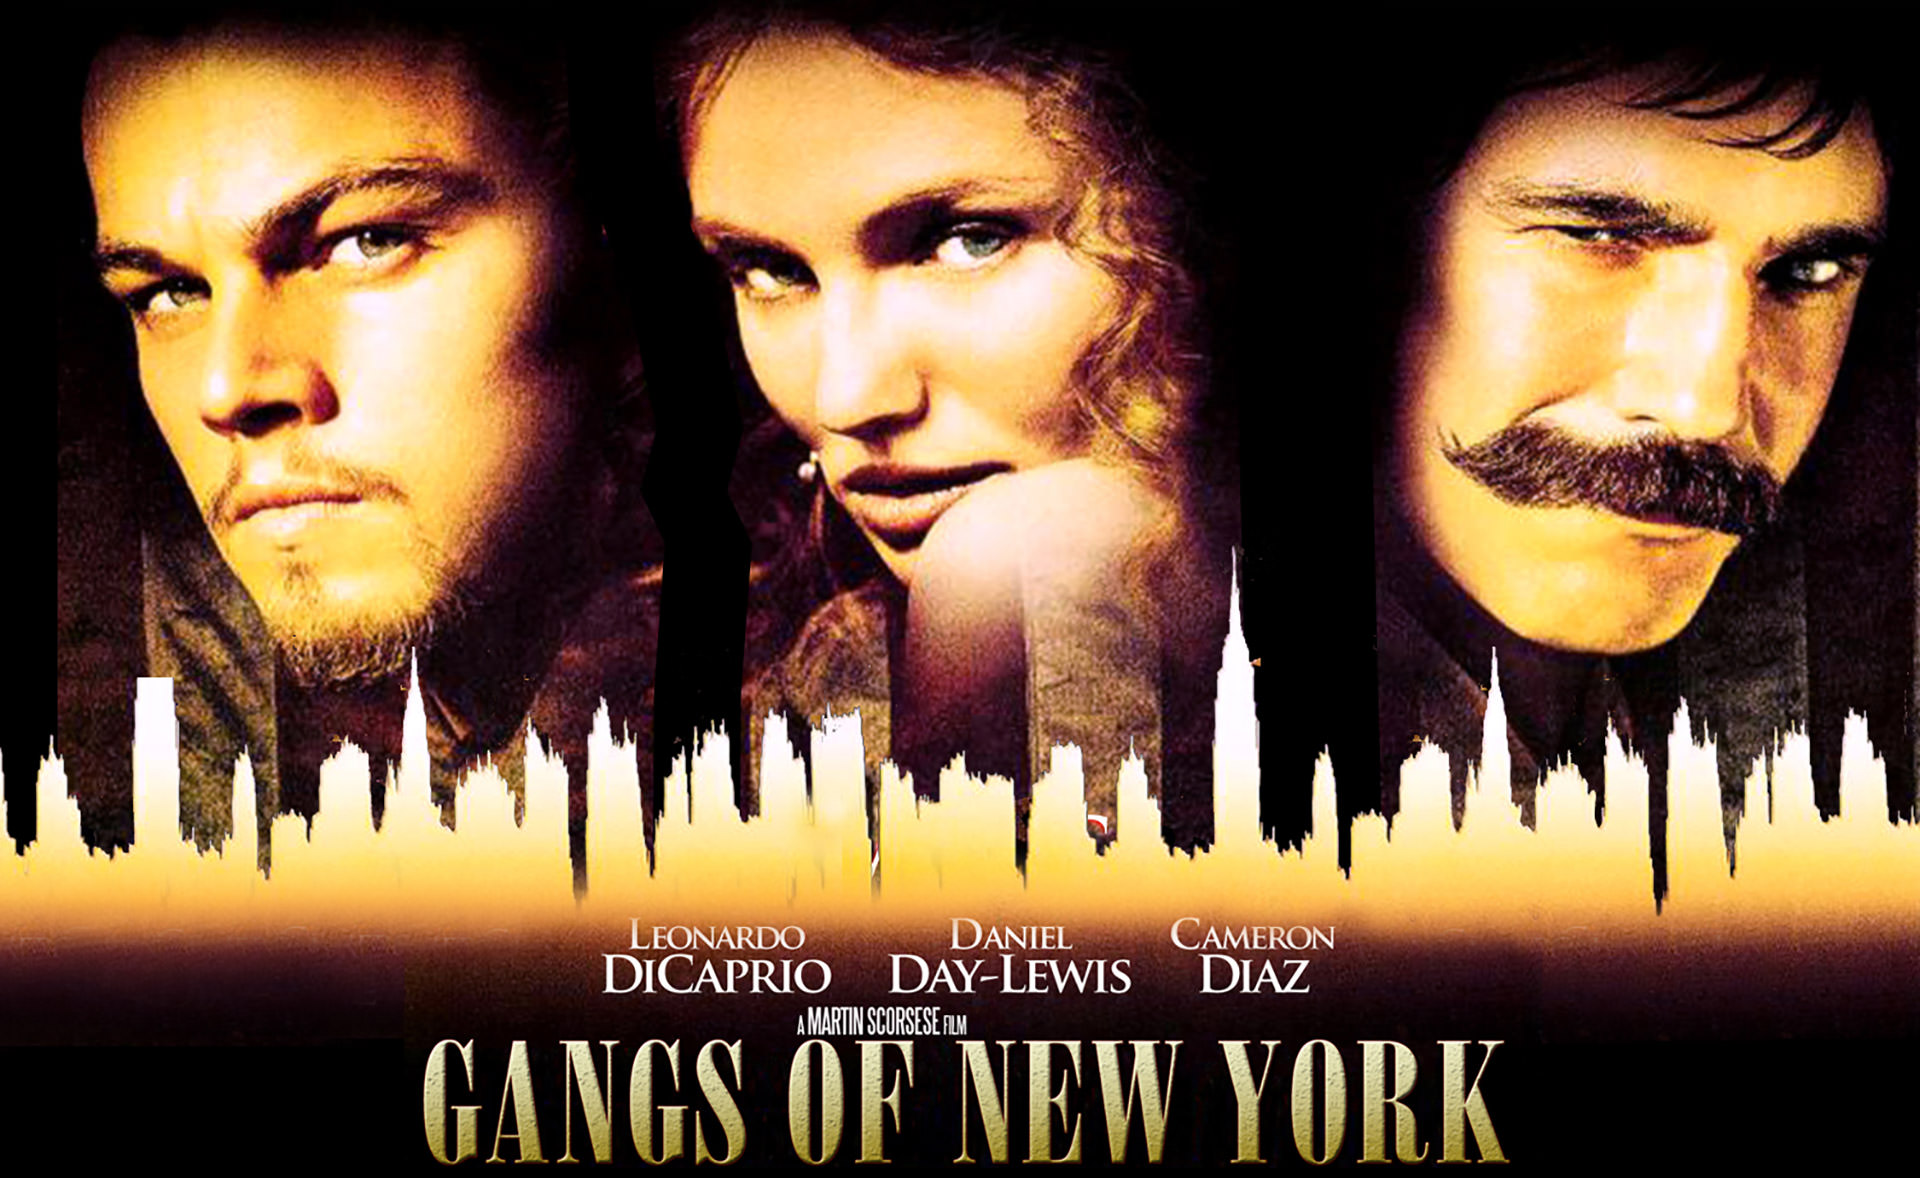 پوستر فیلم Gangs of the New York با حضور دنیل دی لوییس کمرون دیاز و لئوناردو دی کاپریو